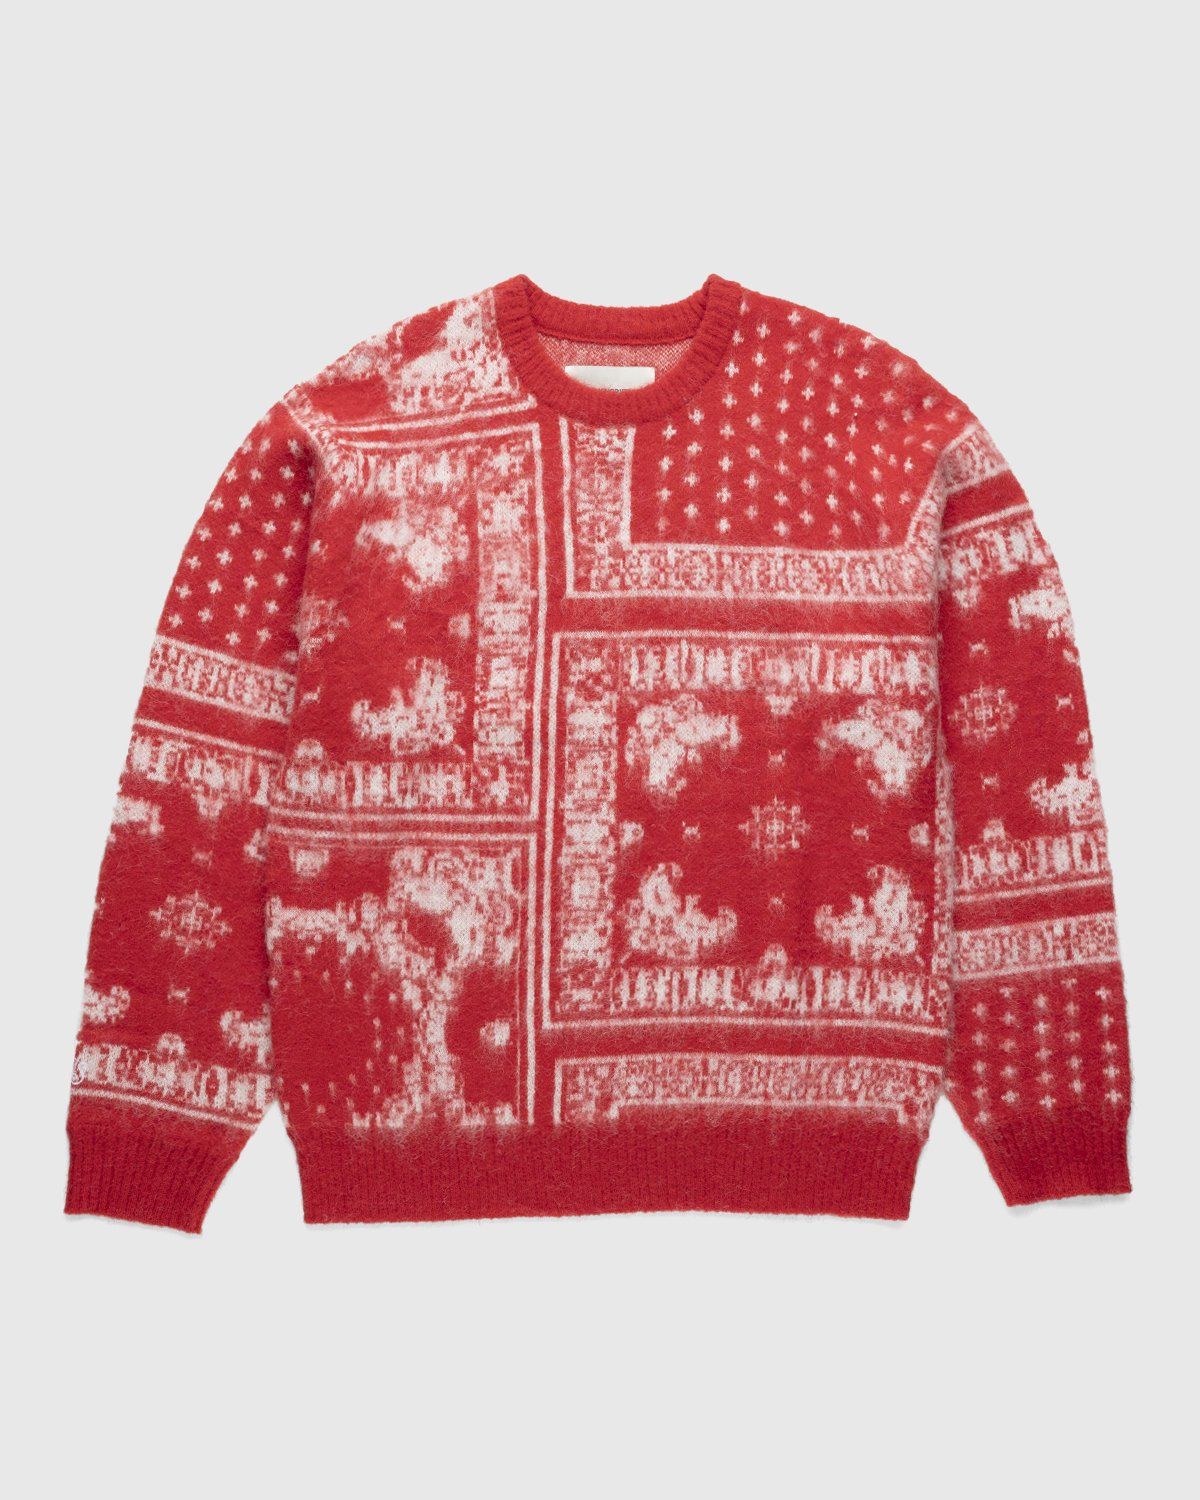 Highsnobiety – Bandana Alpaca Sweater Red - Crewnecks - Red - Image 1